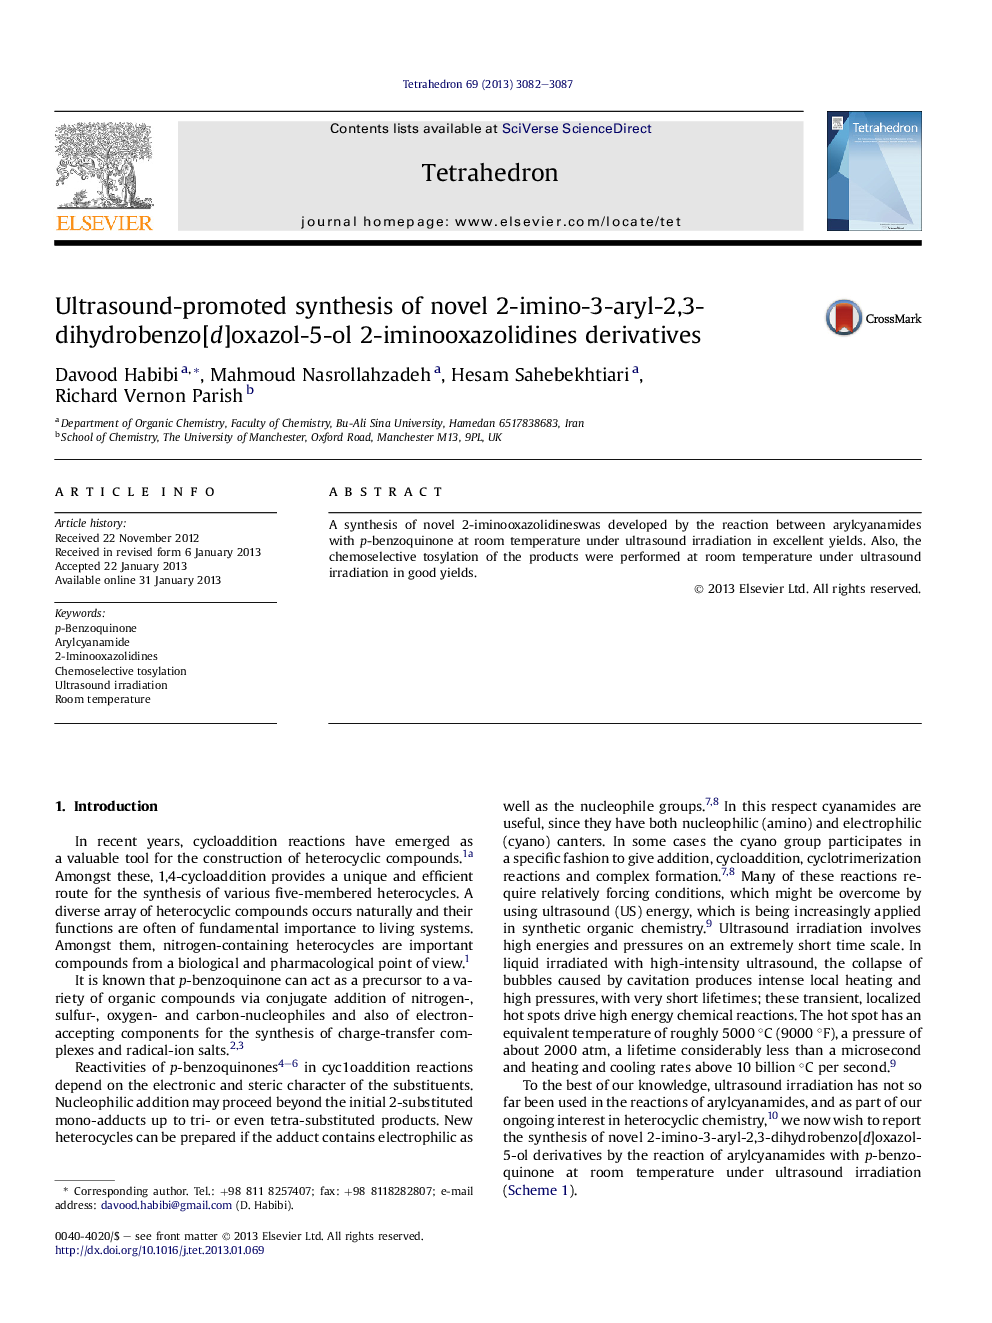 Ultrasound-promoted synthesis of novel 2-imino-3-aryl-2,3-dihydrobenzo[d]oxazol-5-ol 2-iminooxazolidines derivatives